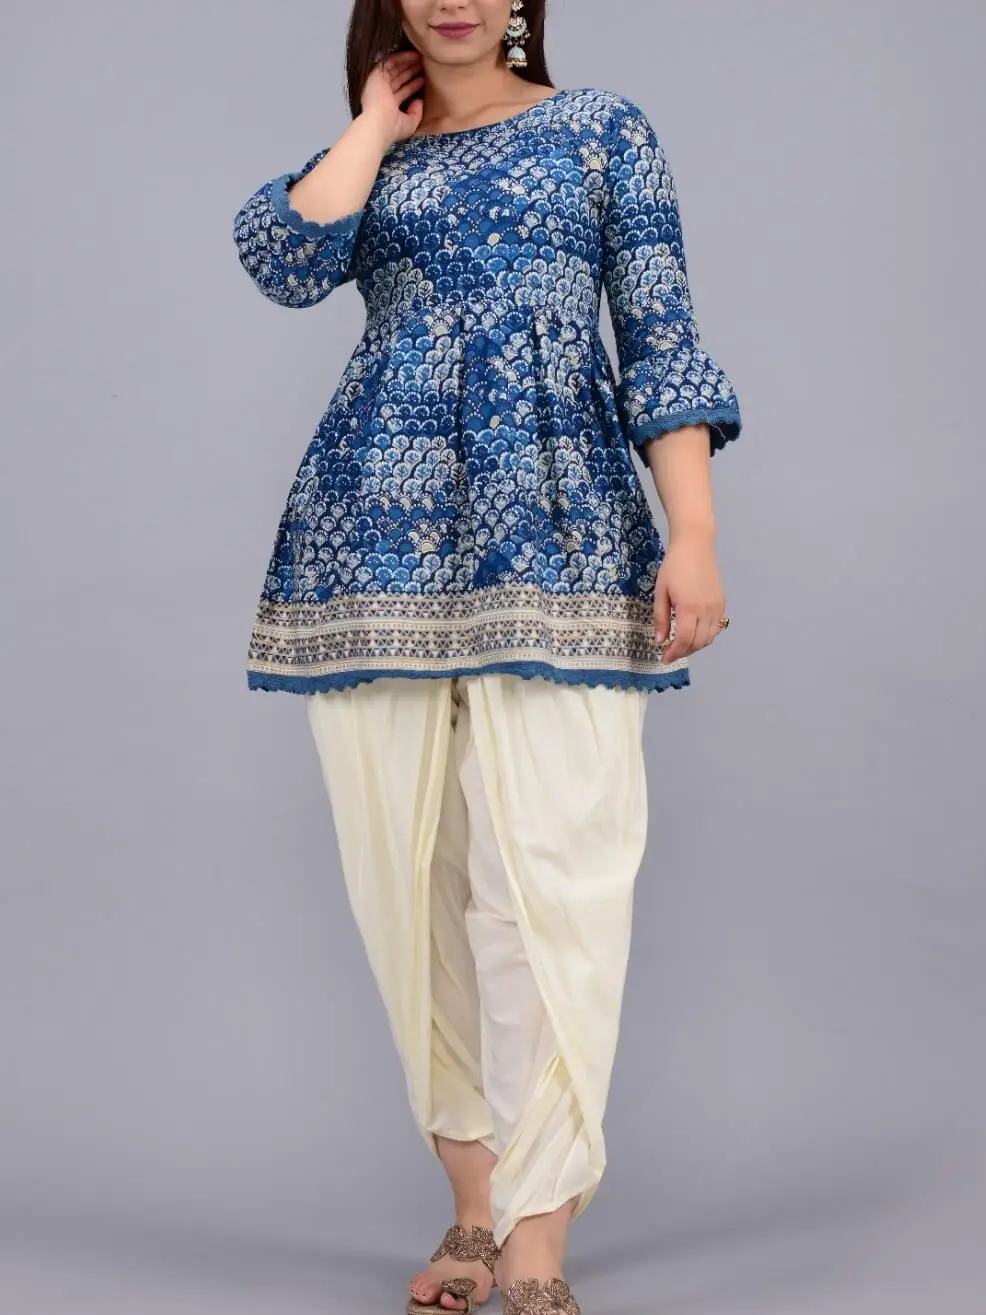 Cotton Dhoti Pants — Haritah Colour, Hand-Stitched Border | AdiValka